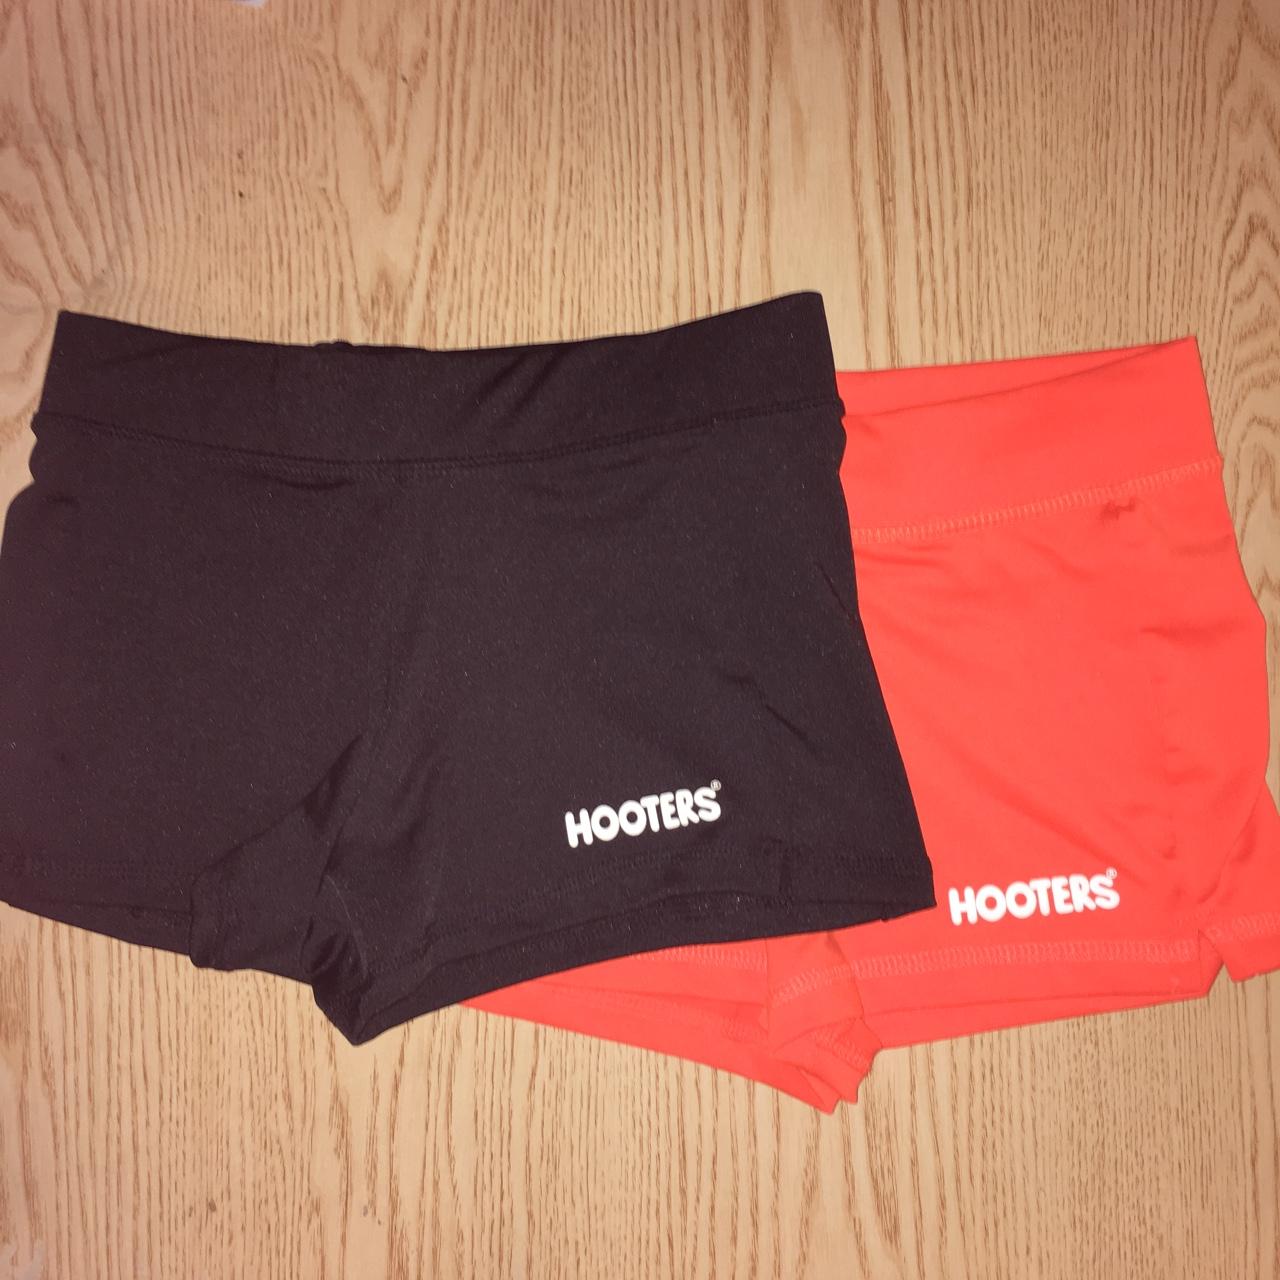 Stylish and Comfy Hooters Girl Orange Shorts